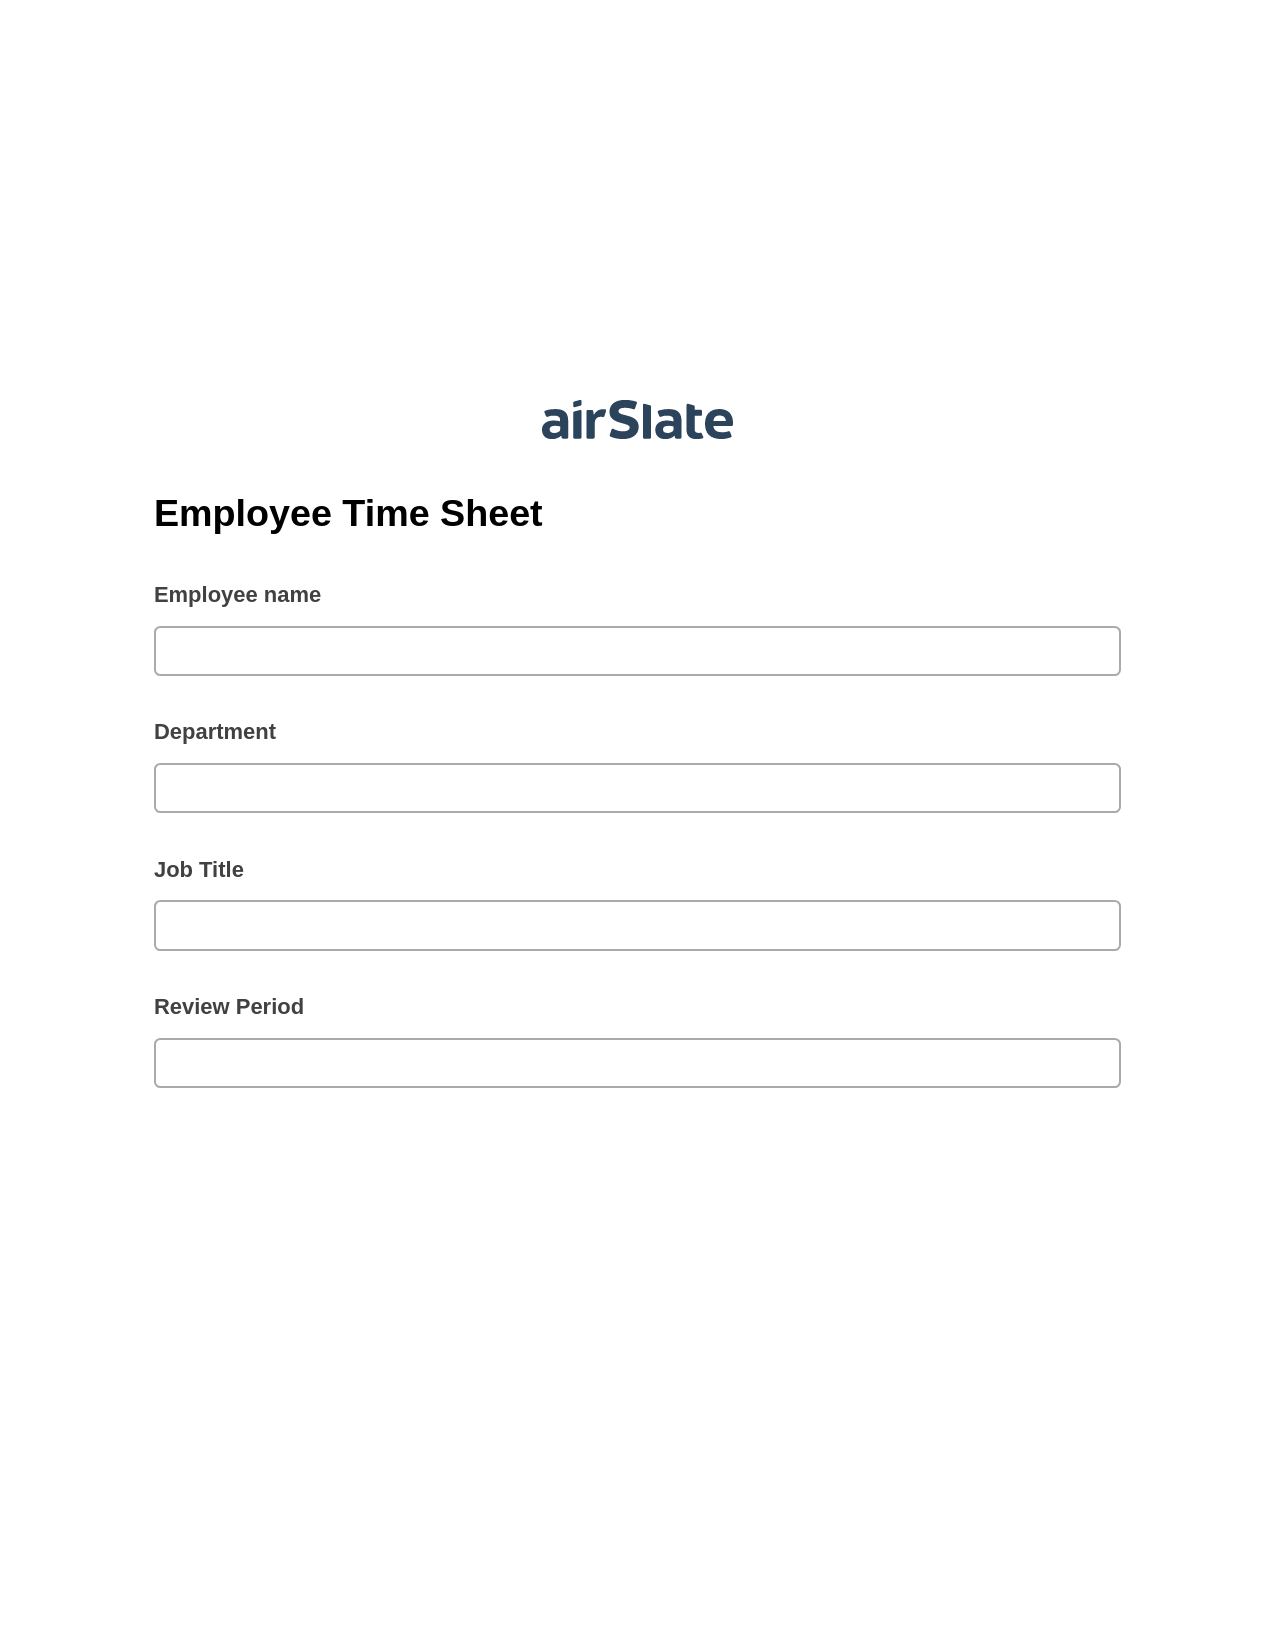 Multirole Employee Time Sheet Pre-fill from Smartsheet Bot, Google Cloud Print Bot, Archive to Google Drive Bot